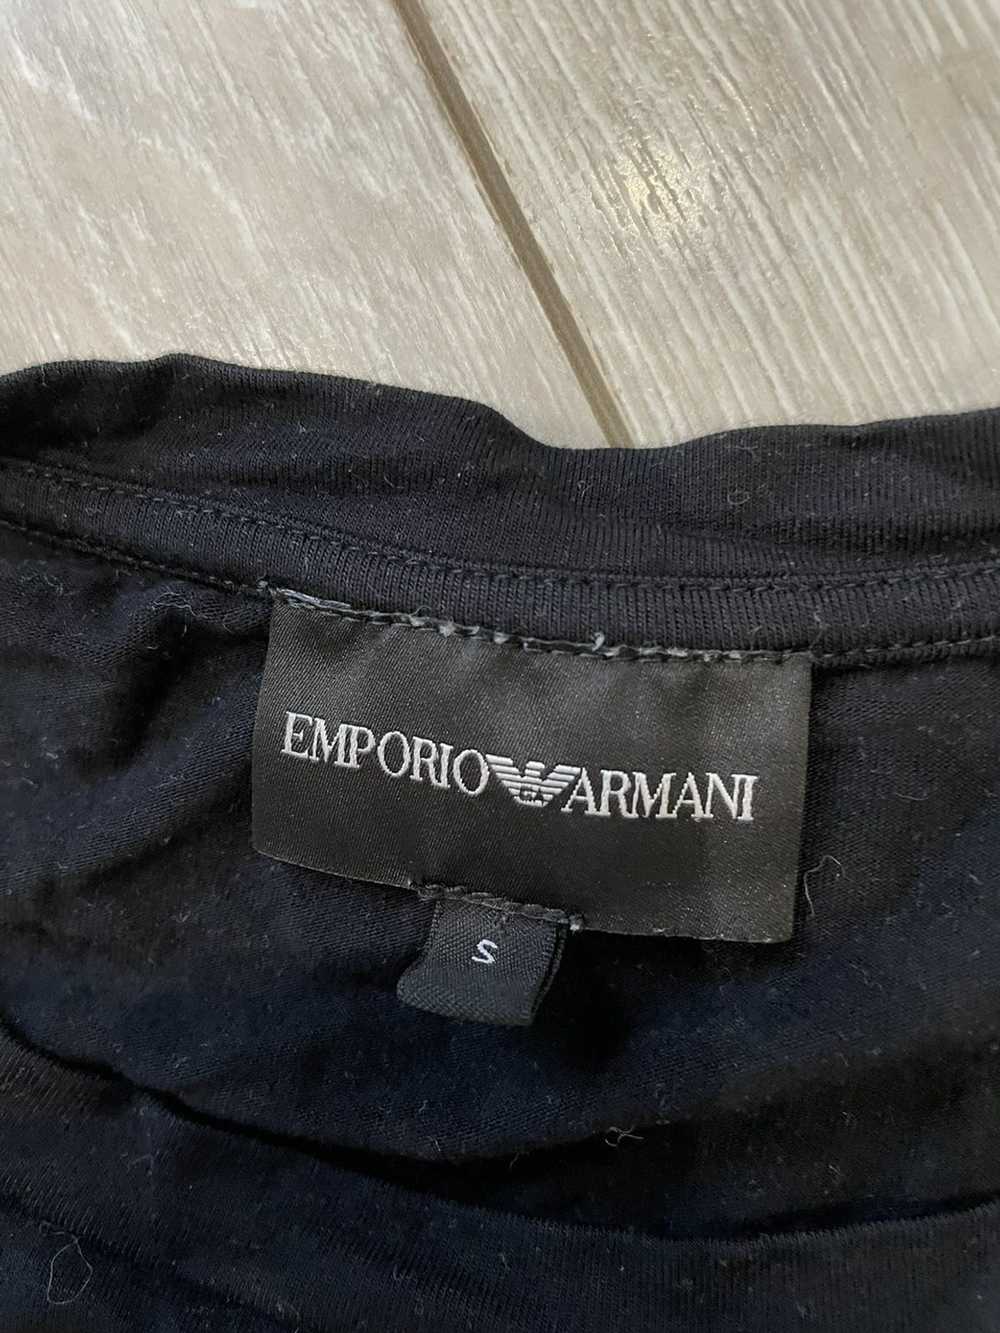 Emporio Armani × Streetwear Emporio Armani t shirt - image 3